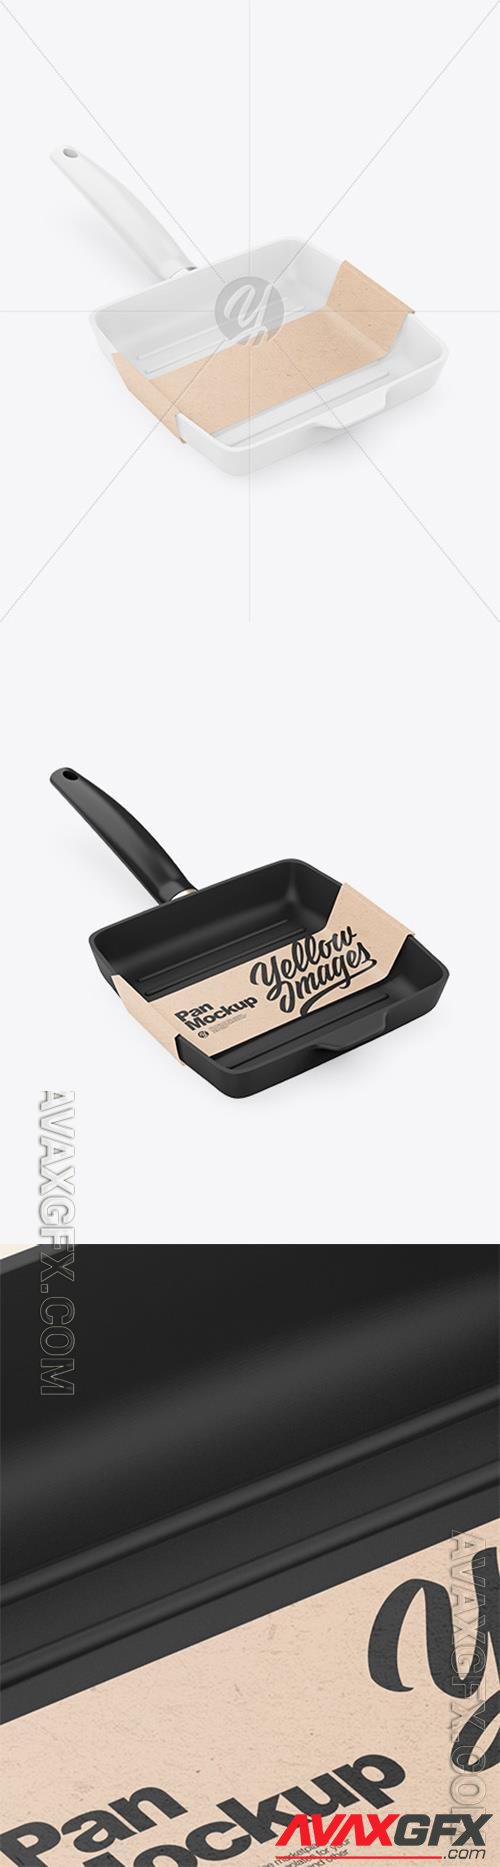 Grill Frying Pan with Kraft Paper Label Mockup 84595 TIF